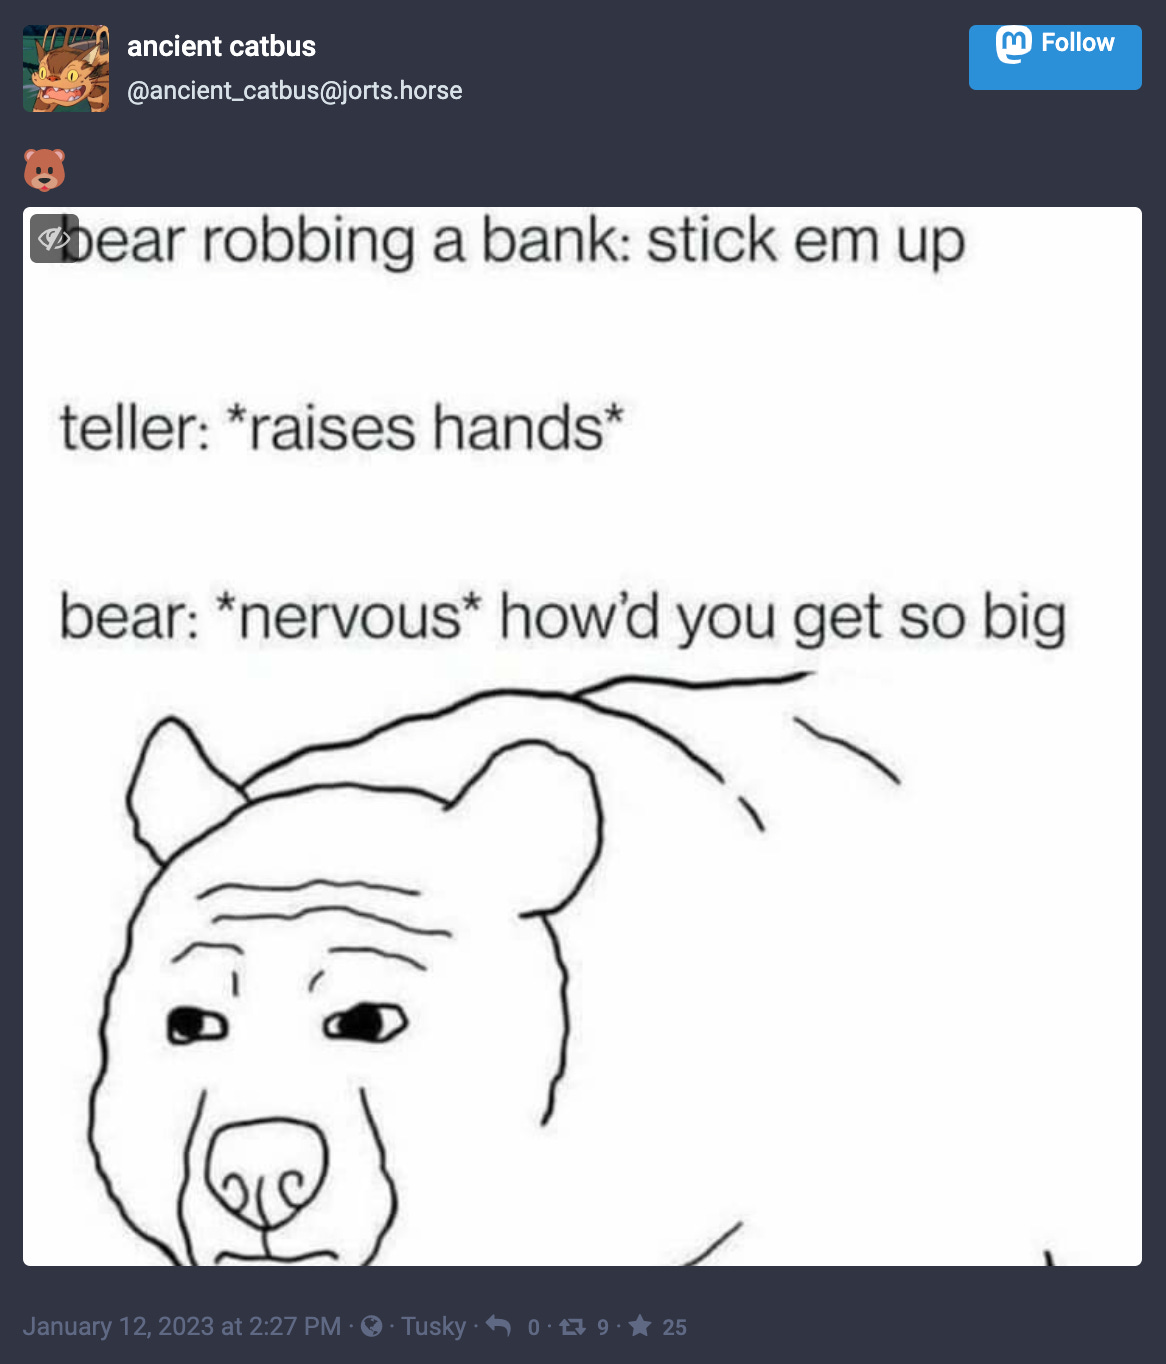 bear robbing a bank: stick em up. teller: *raises hands*. bear*nervous*: how’d you get so big? 